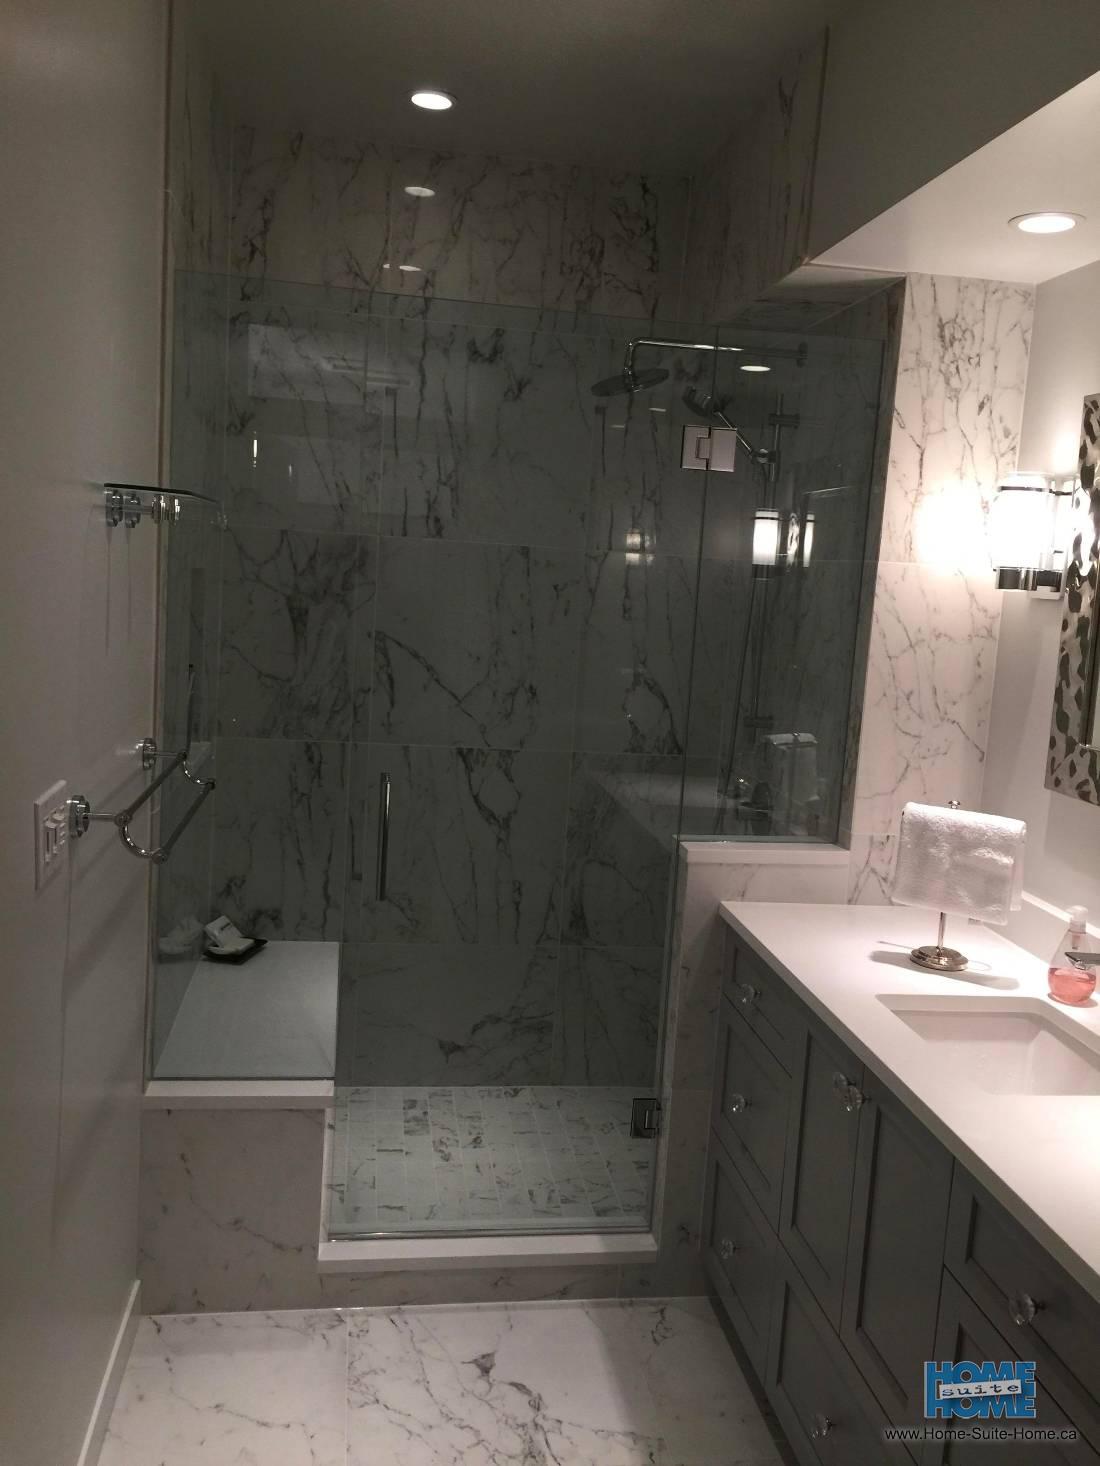 Bathroom Renovations Pictures Dream Home Design